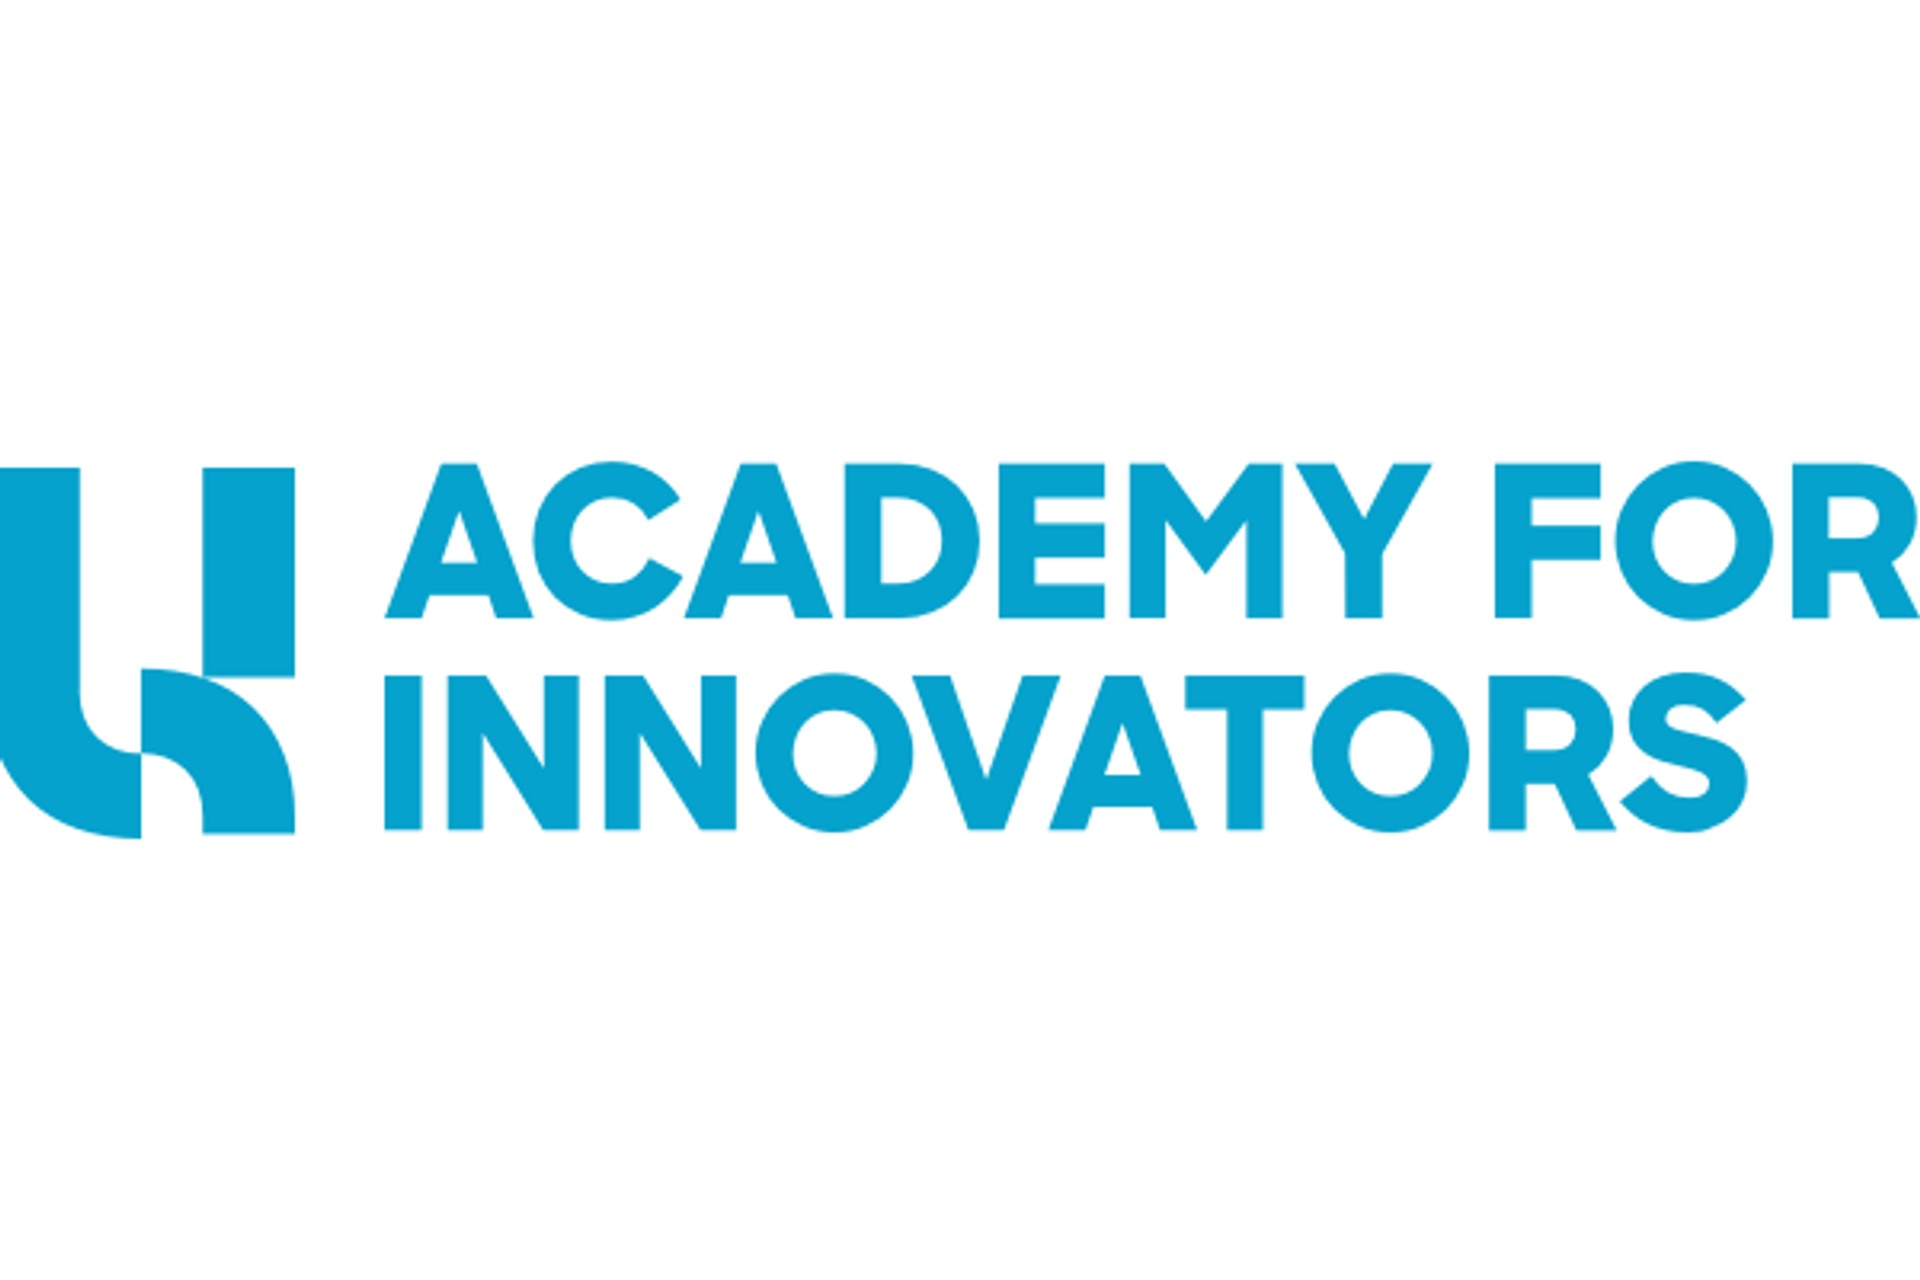 Academy for innovators